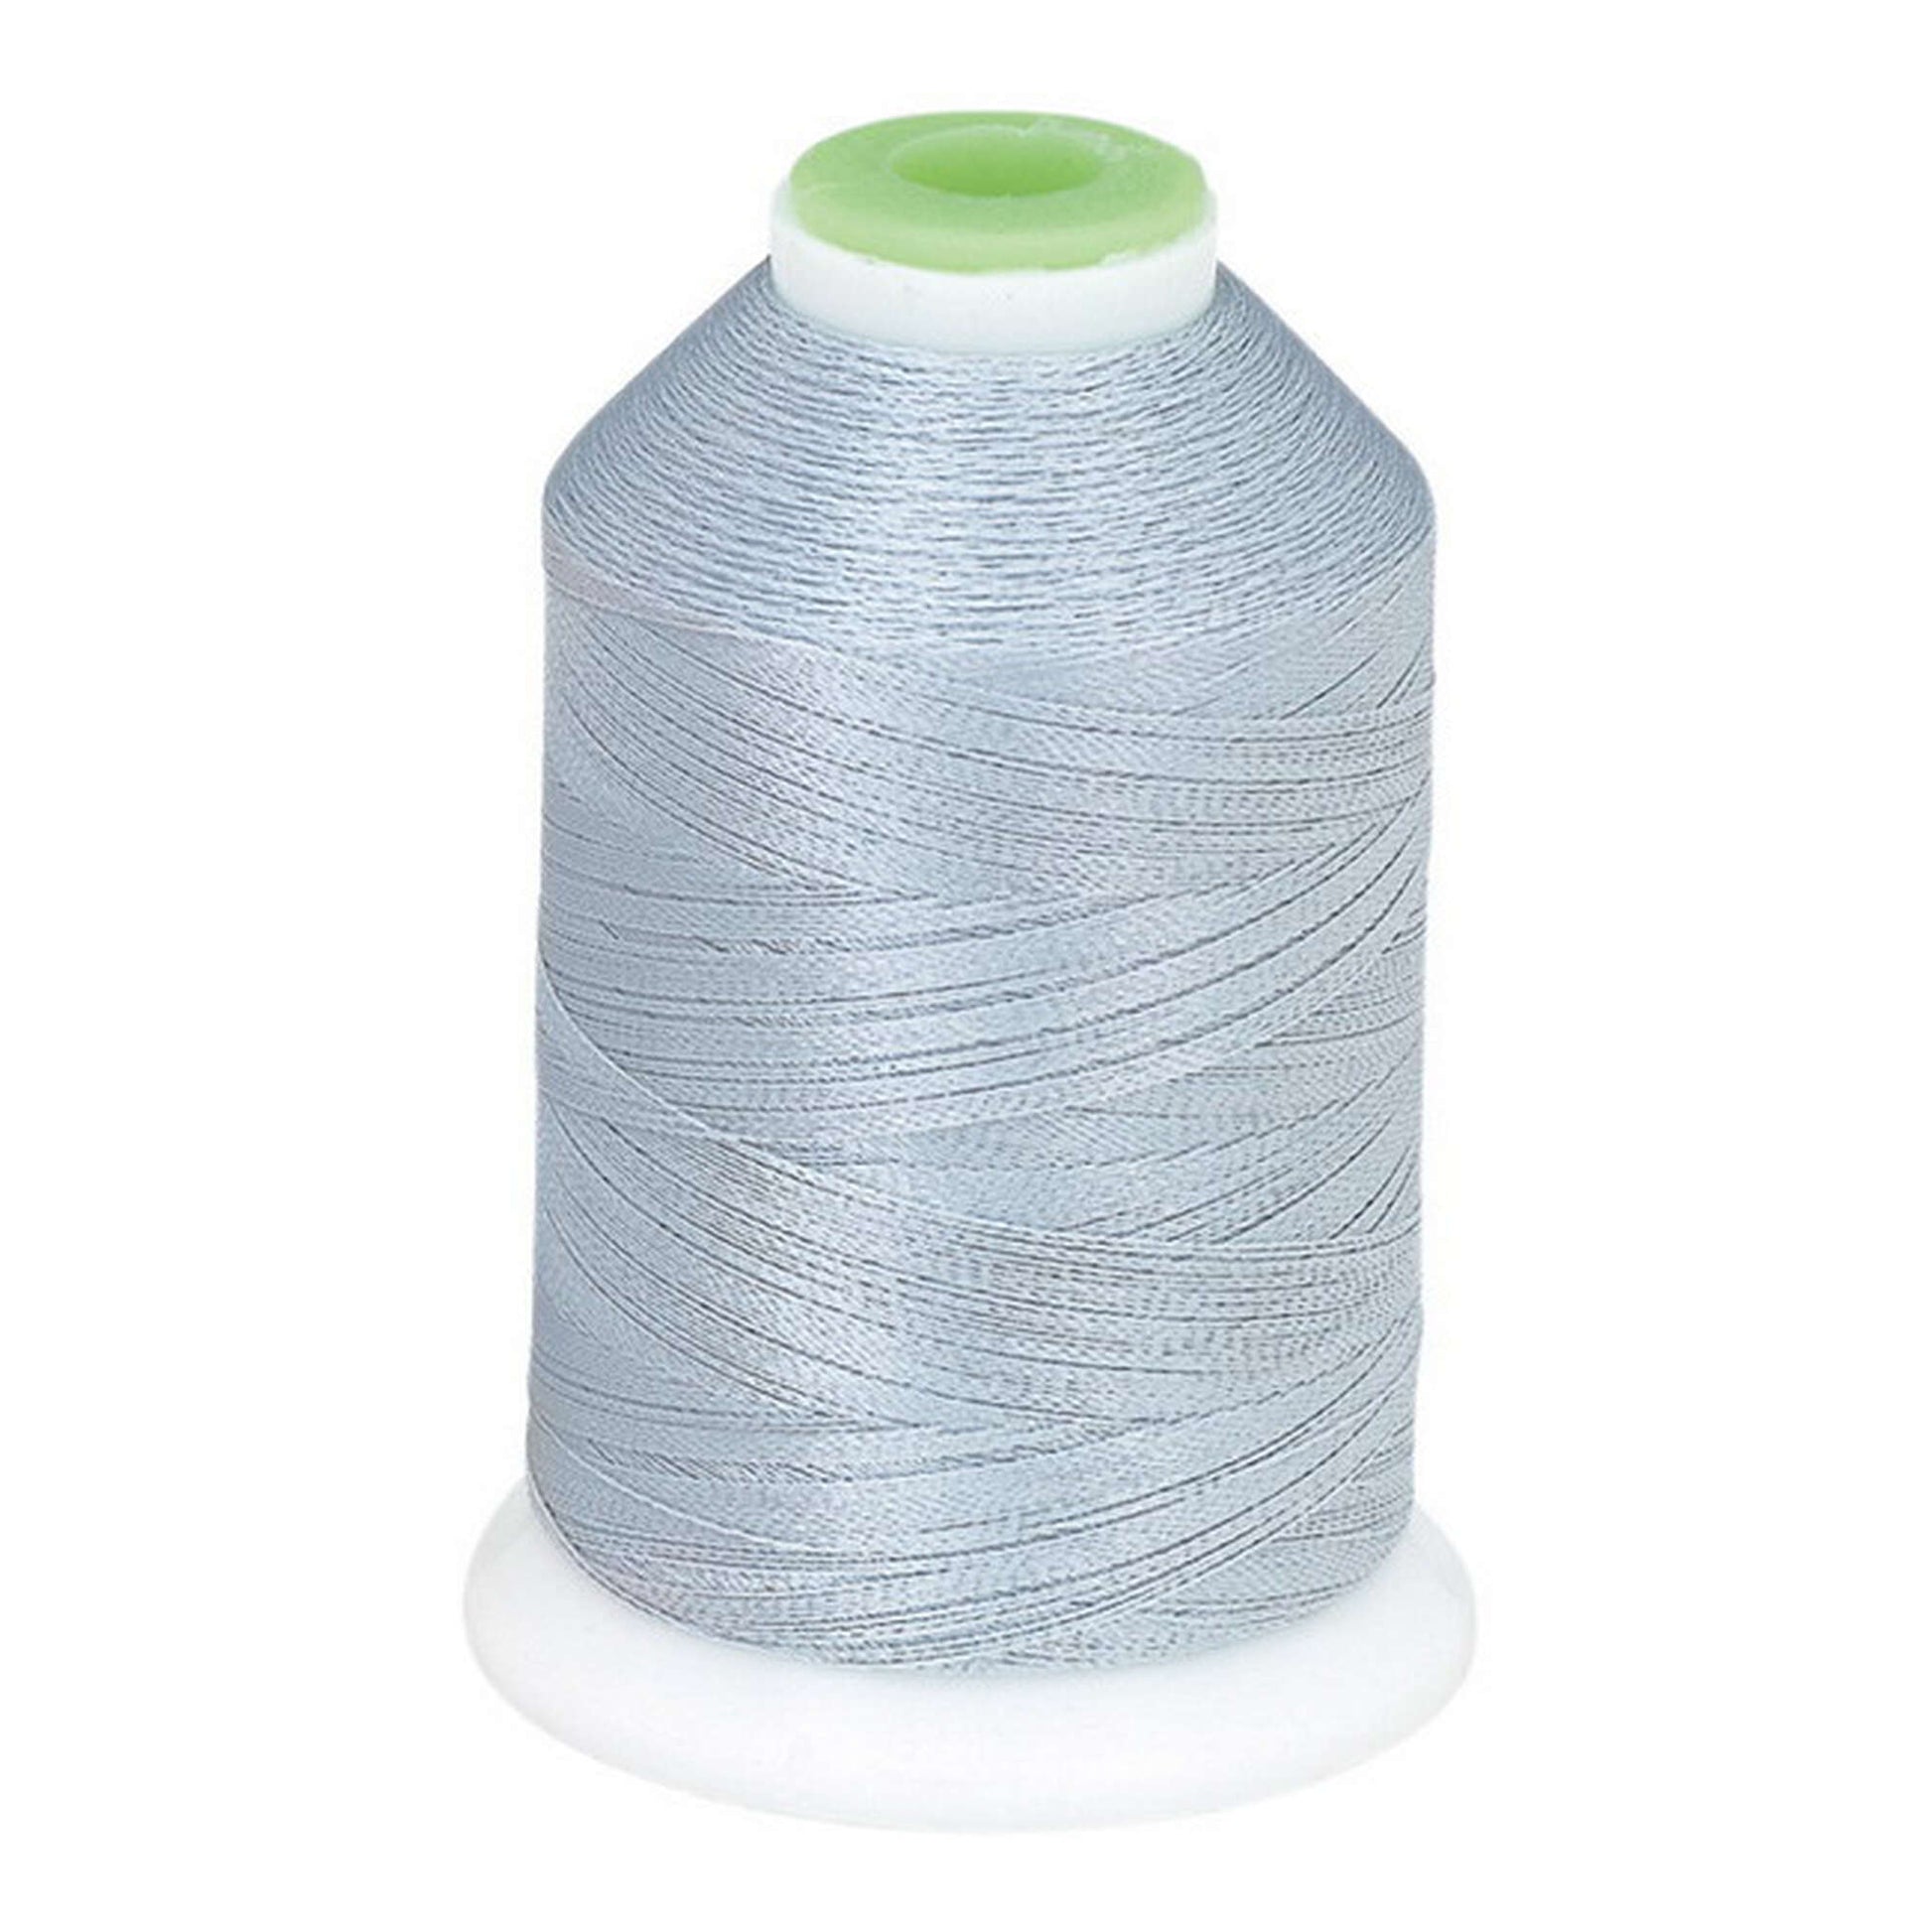 Coats & Clark Machine Embroidery Thread (1100 Yards) Silver